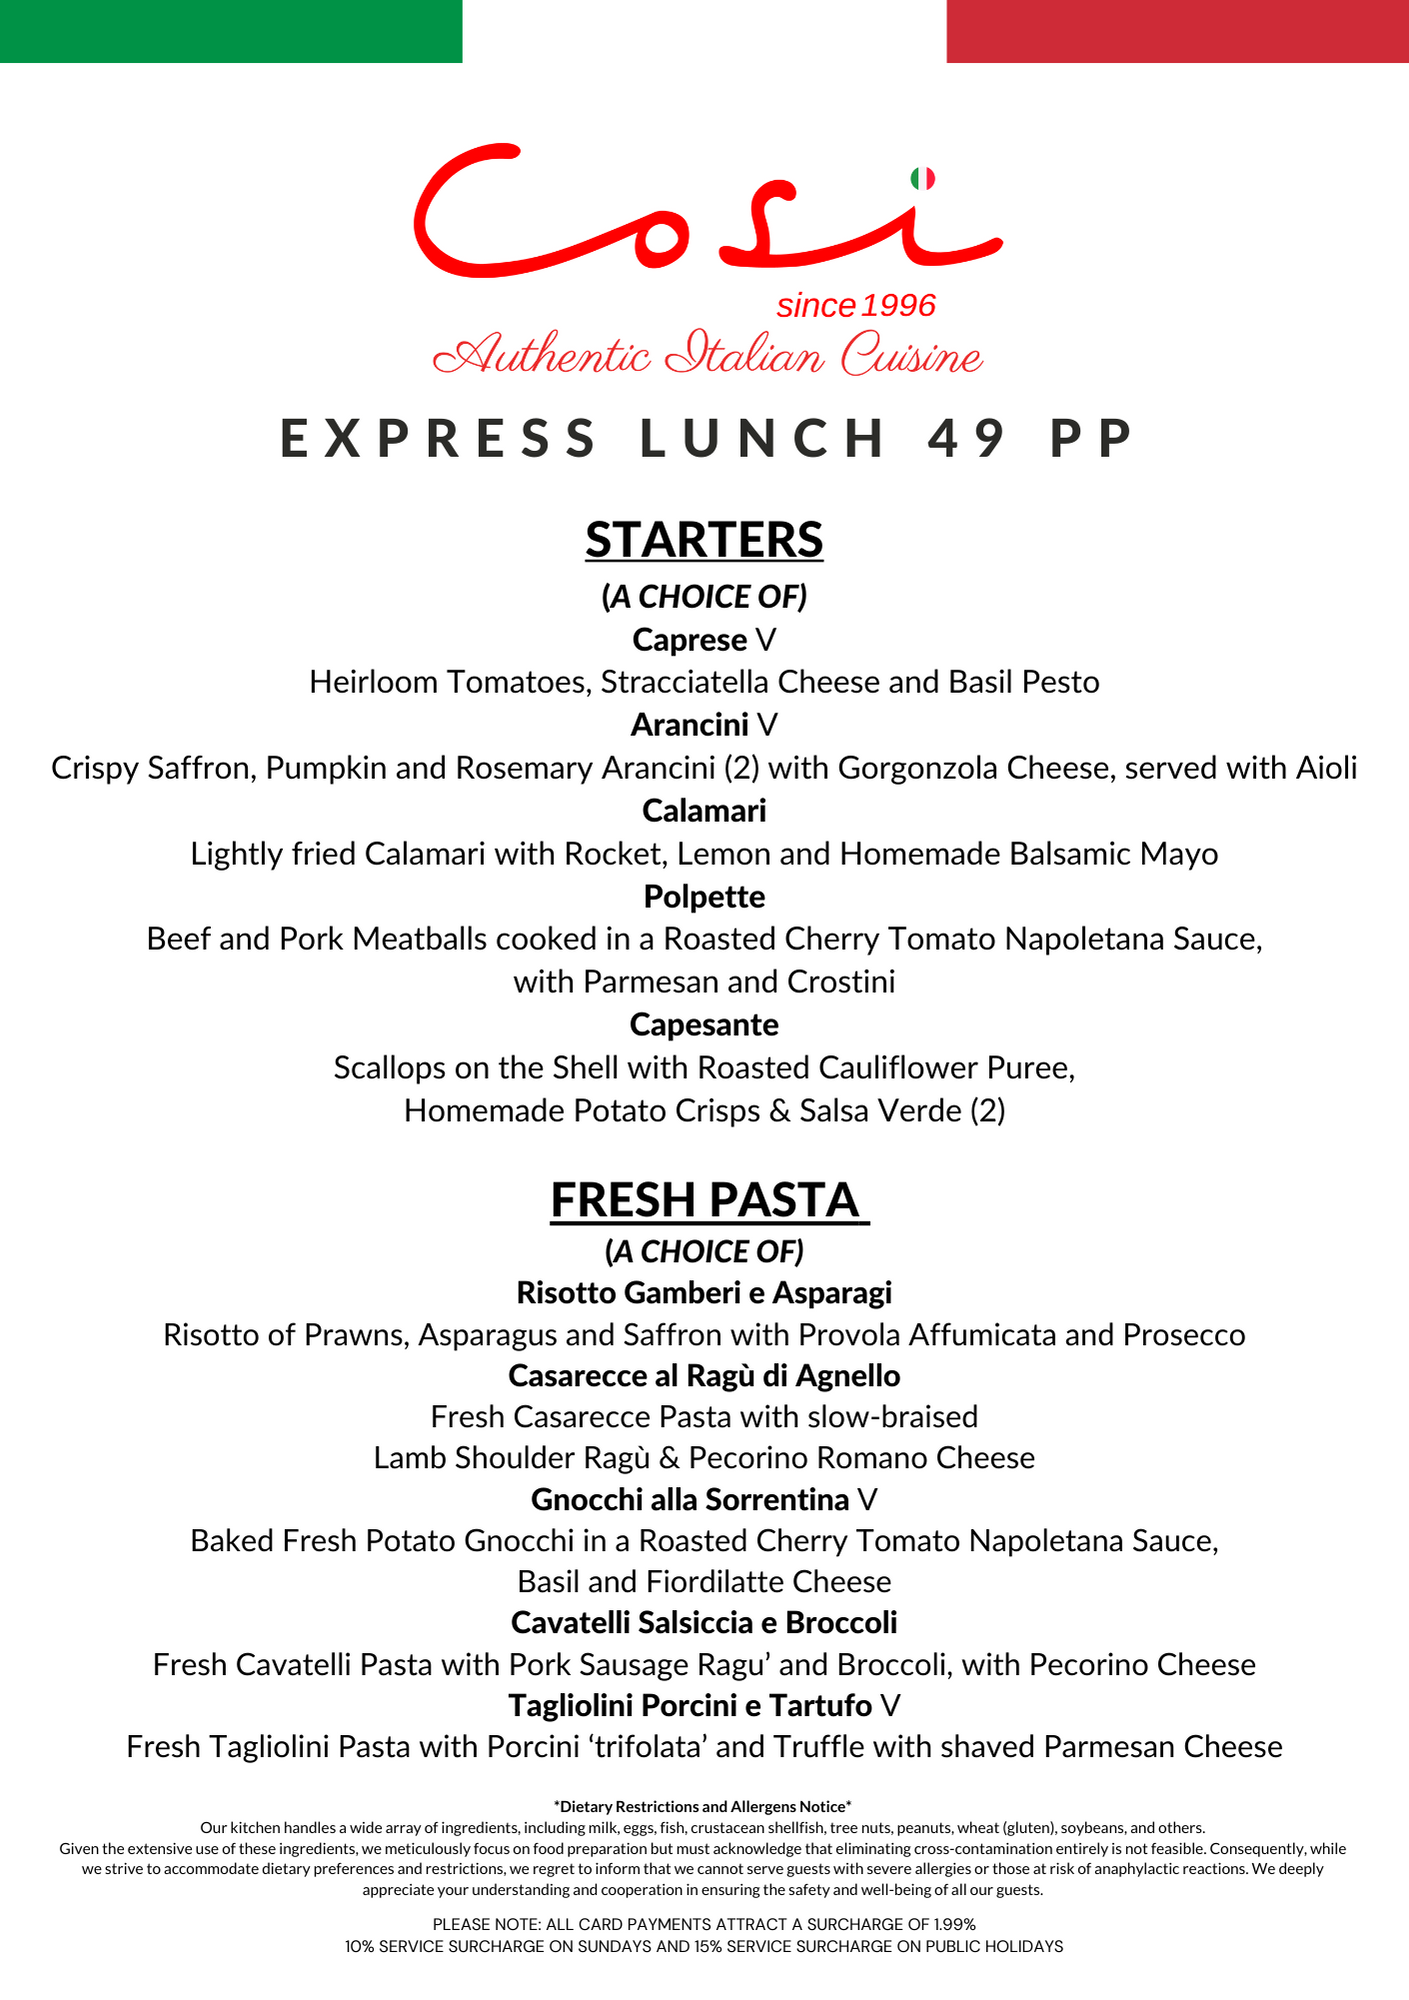 Express Lunch menu